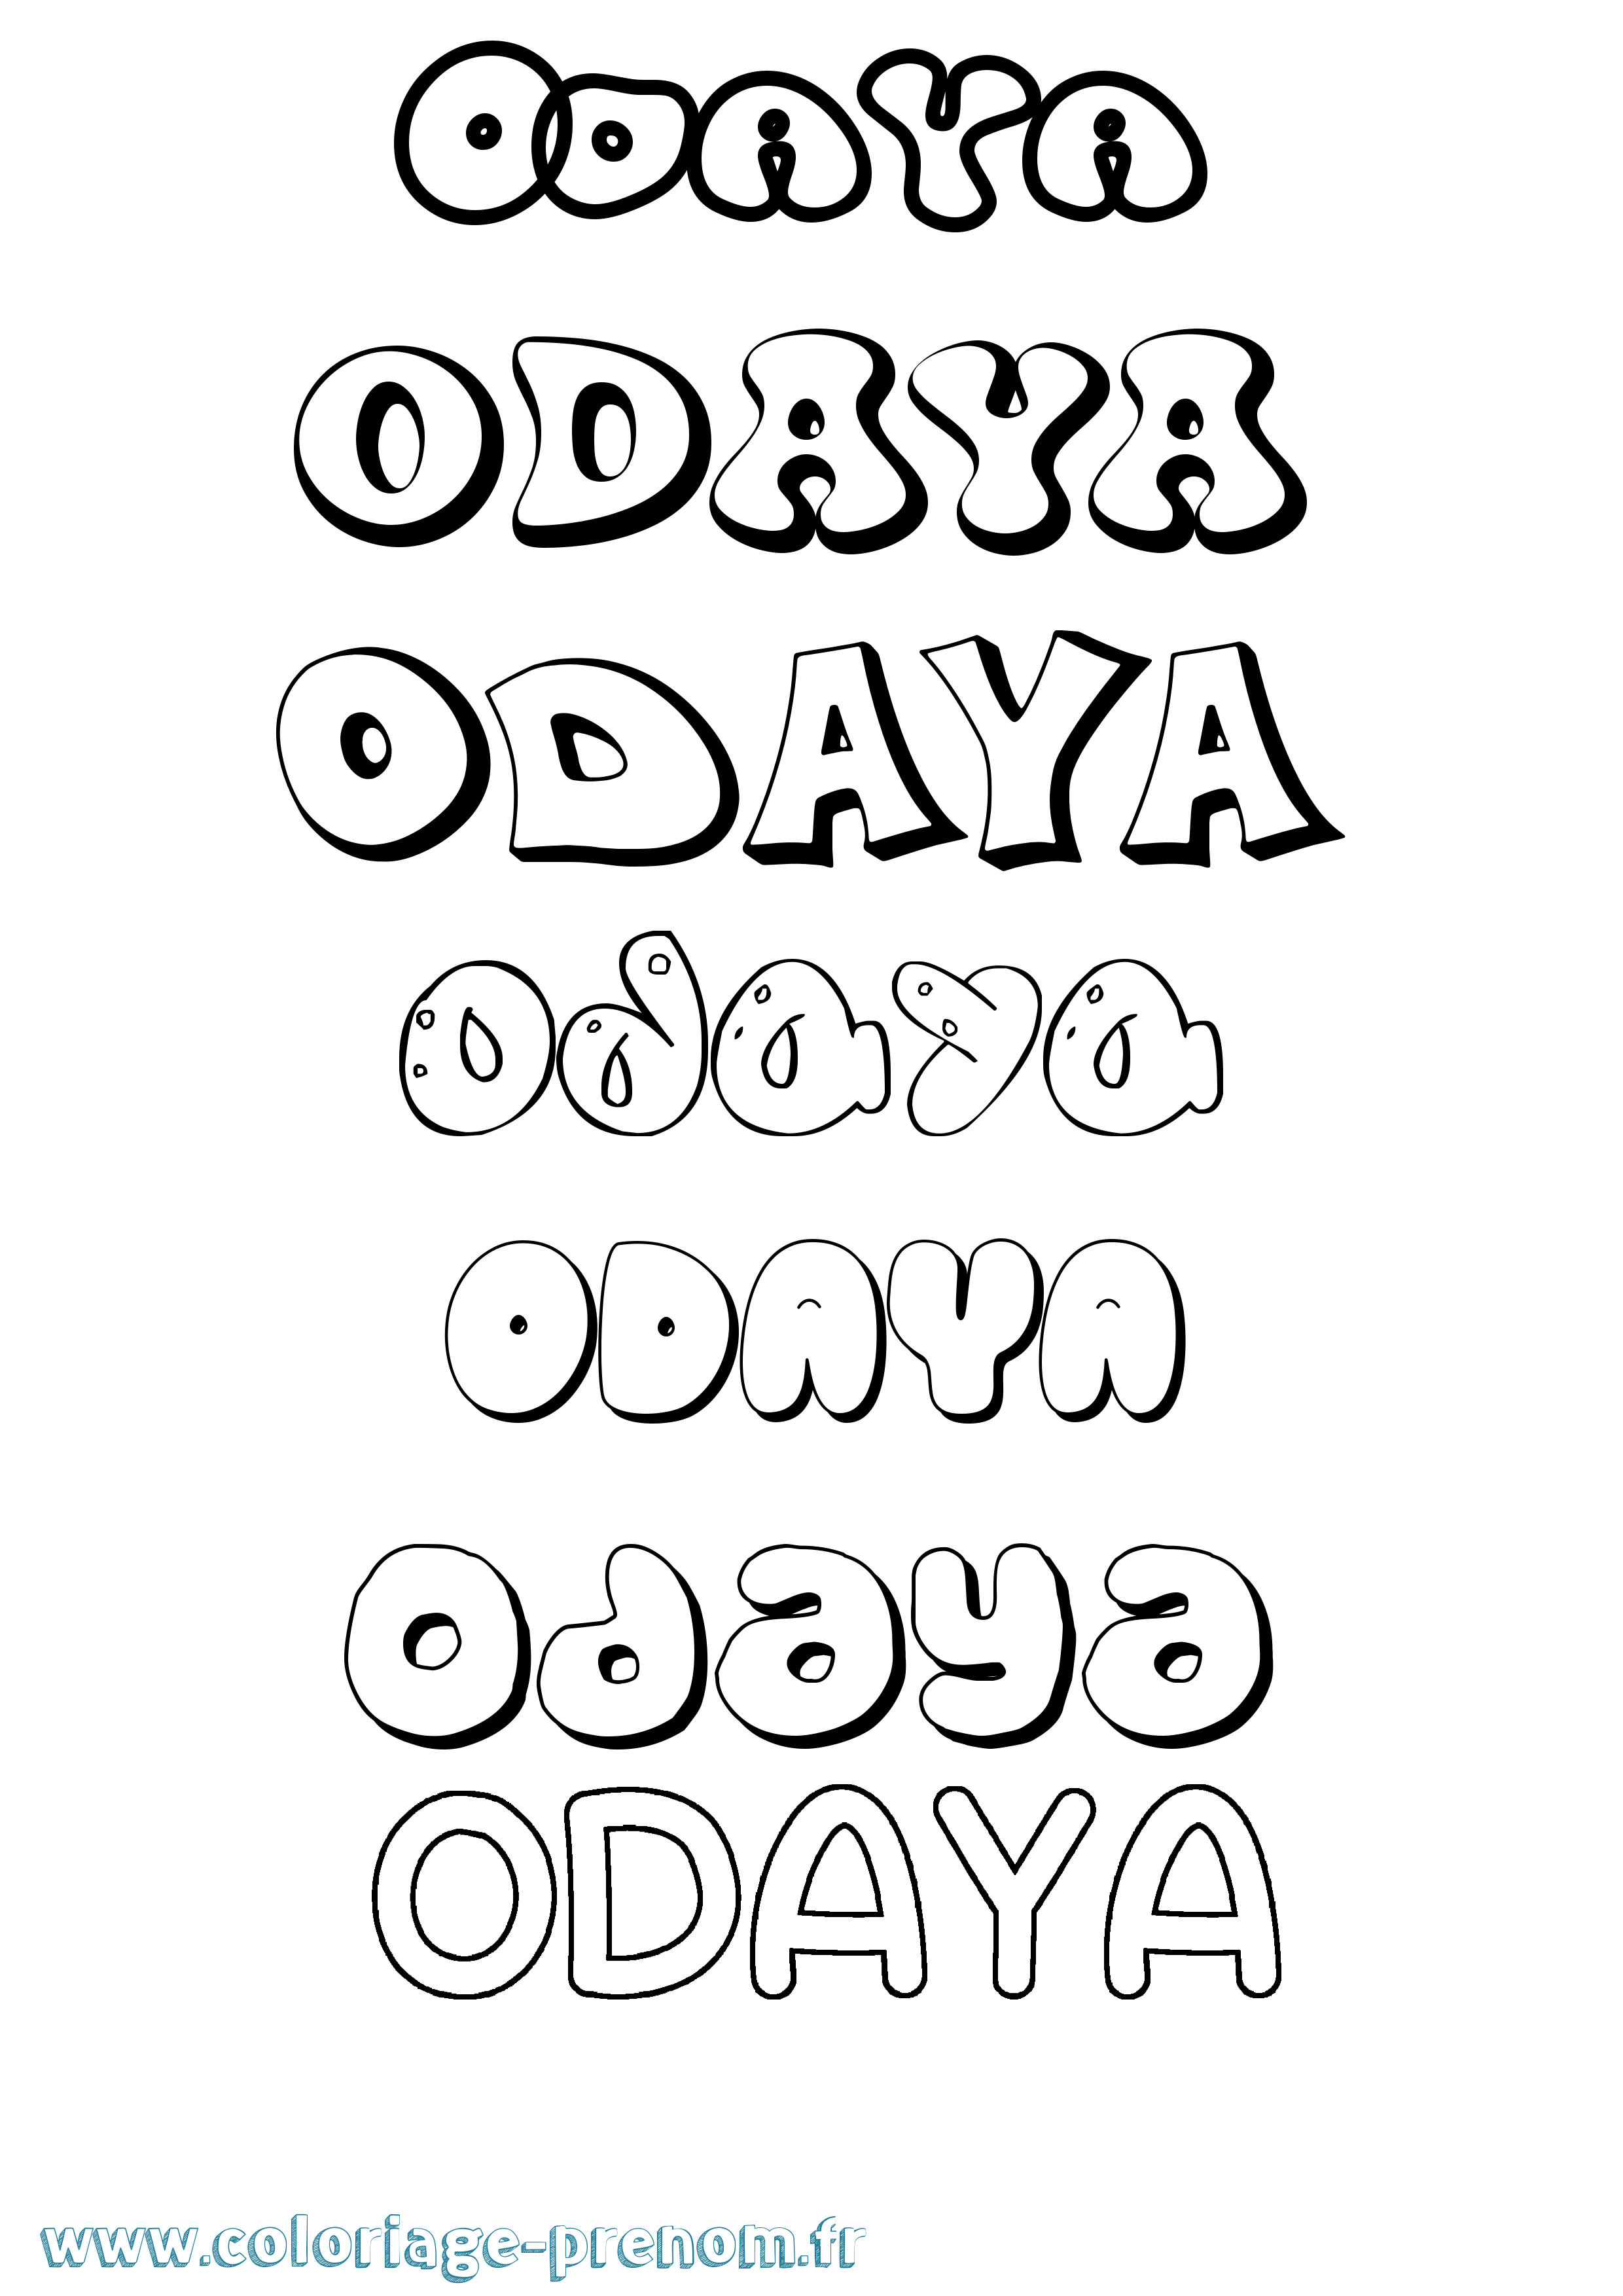 Coloriage prénom Odaya Bubble